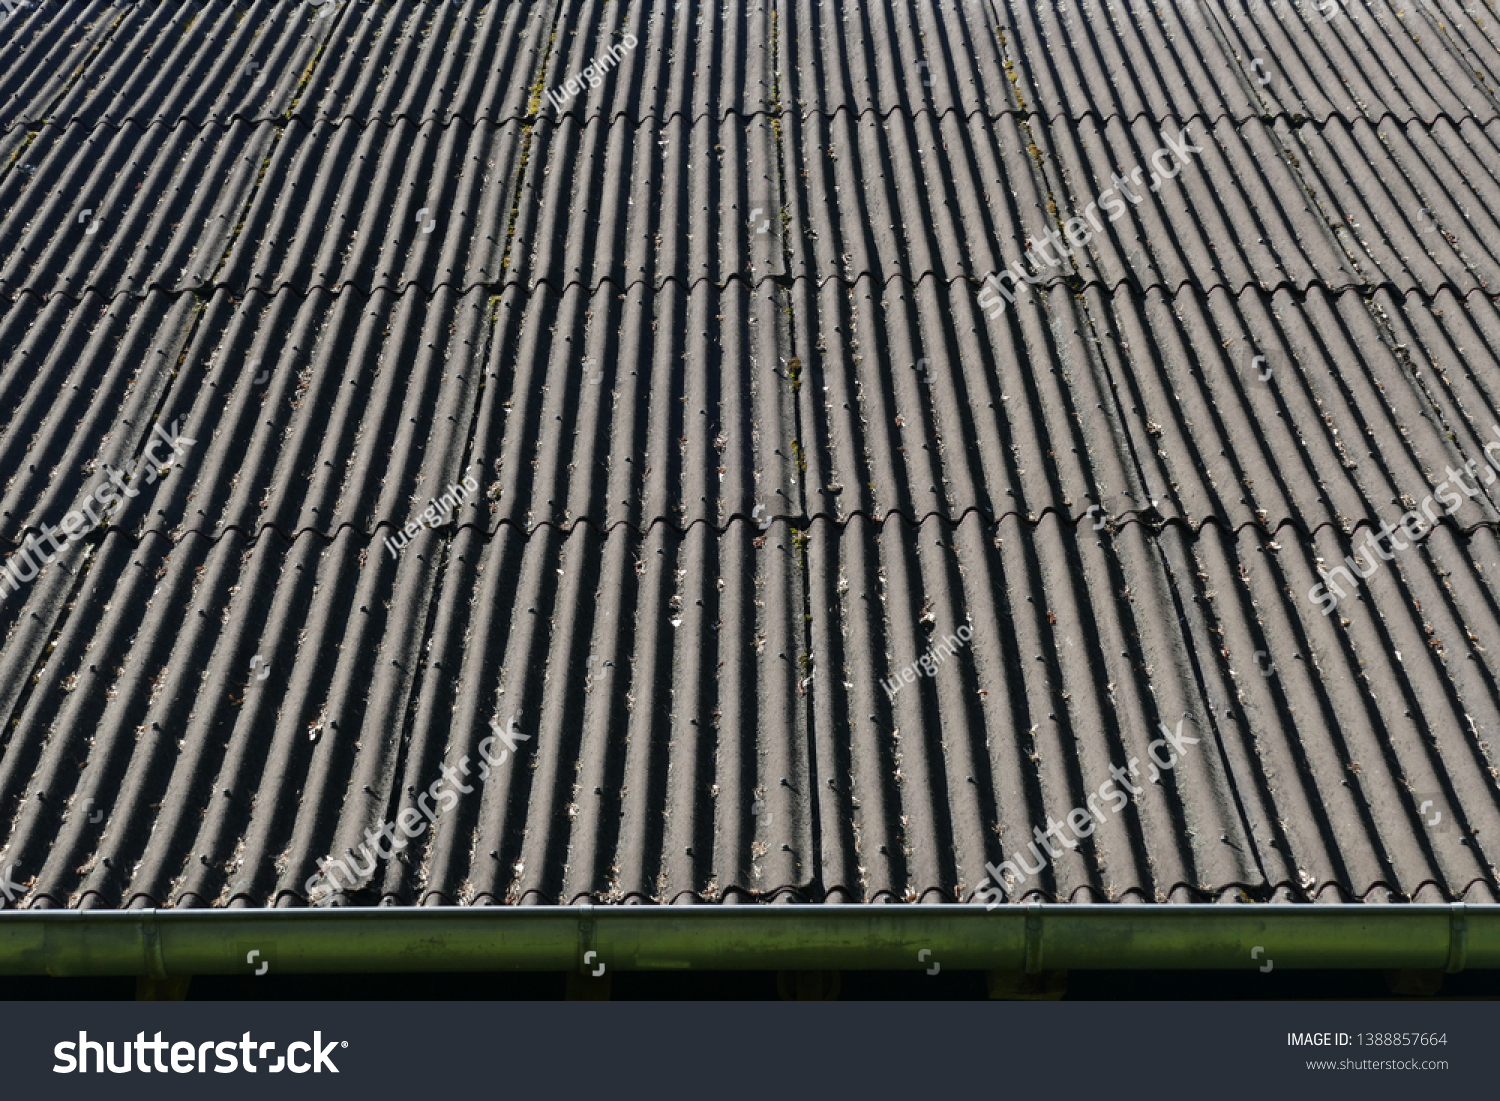 Dangerous Asbestos Eternit Roof Old House Stock Photo 1388857664 ...